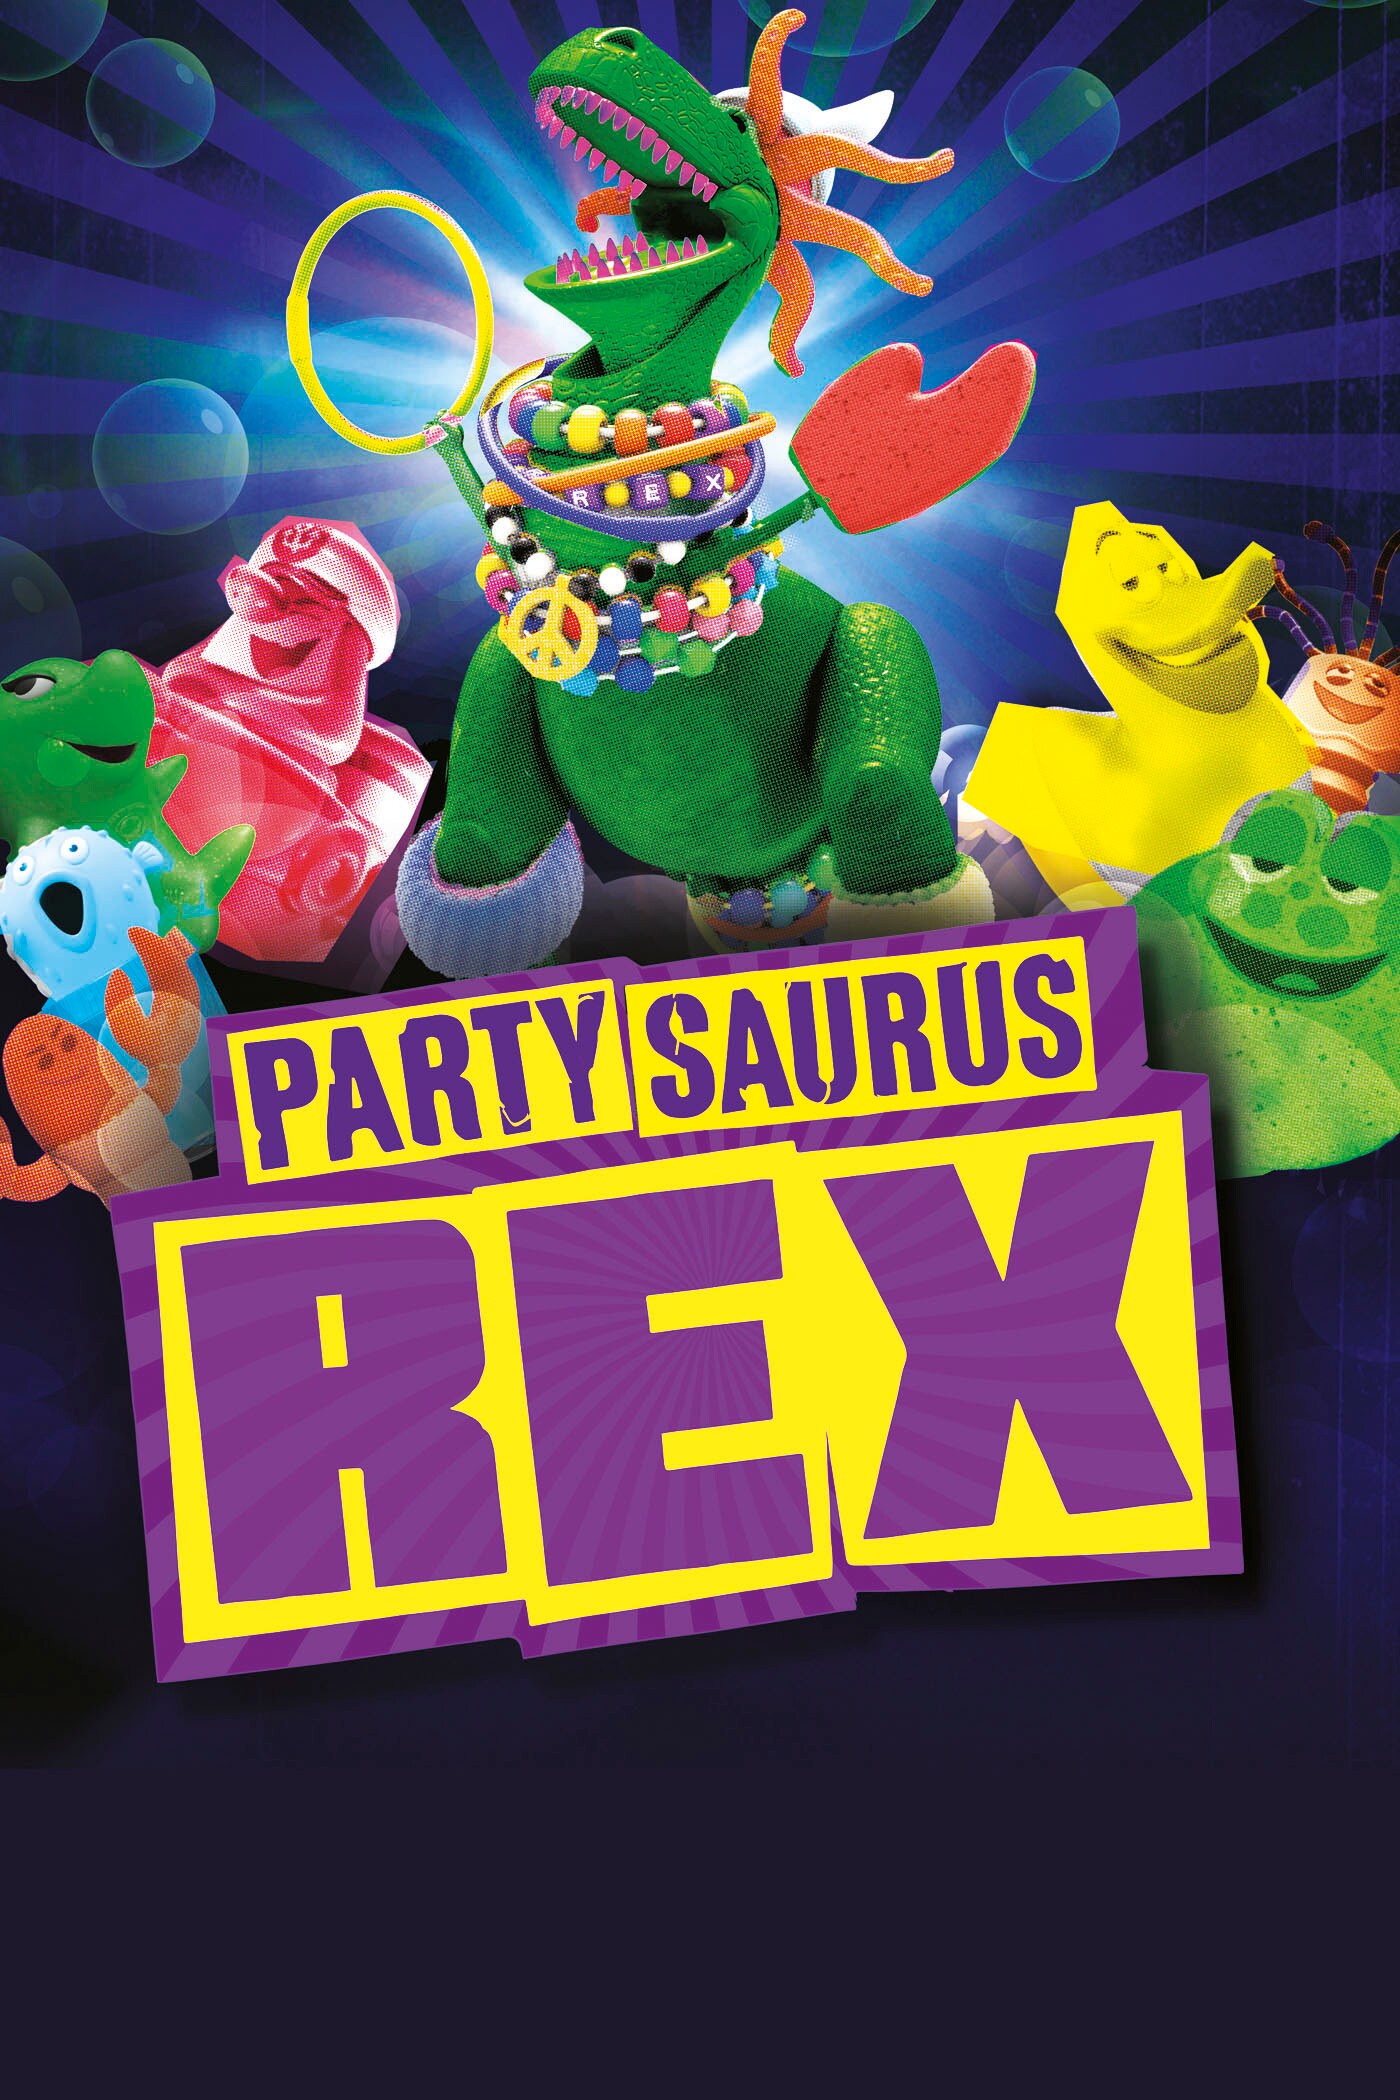 download partysaurus rex toy